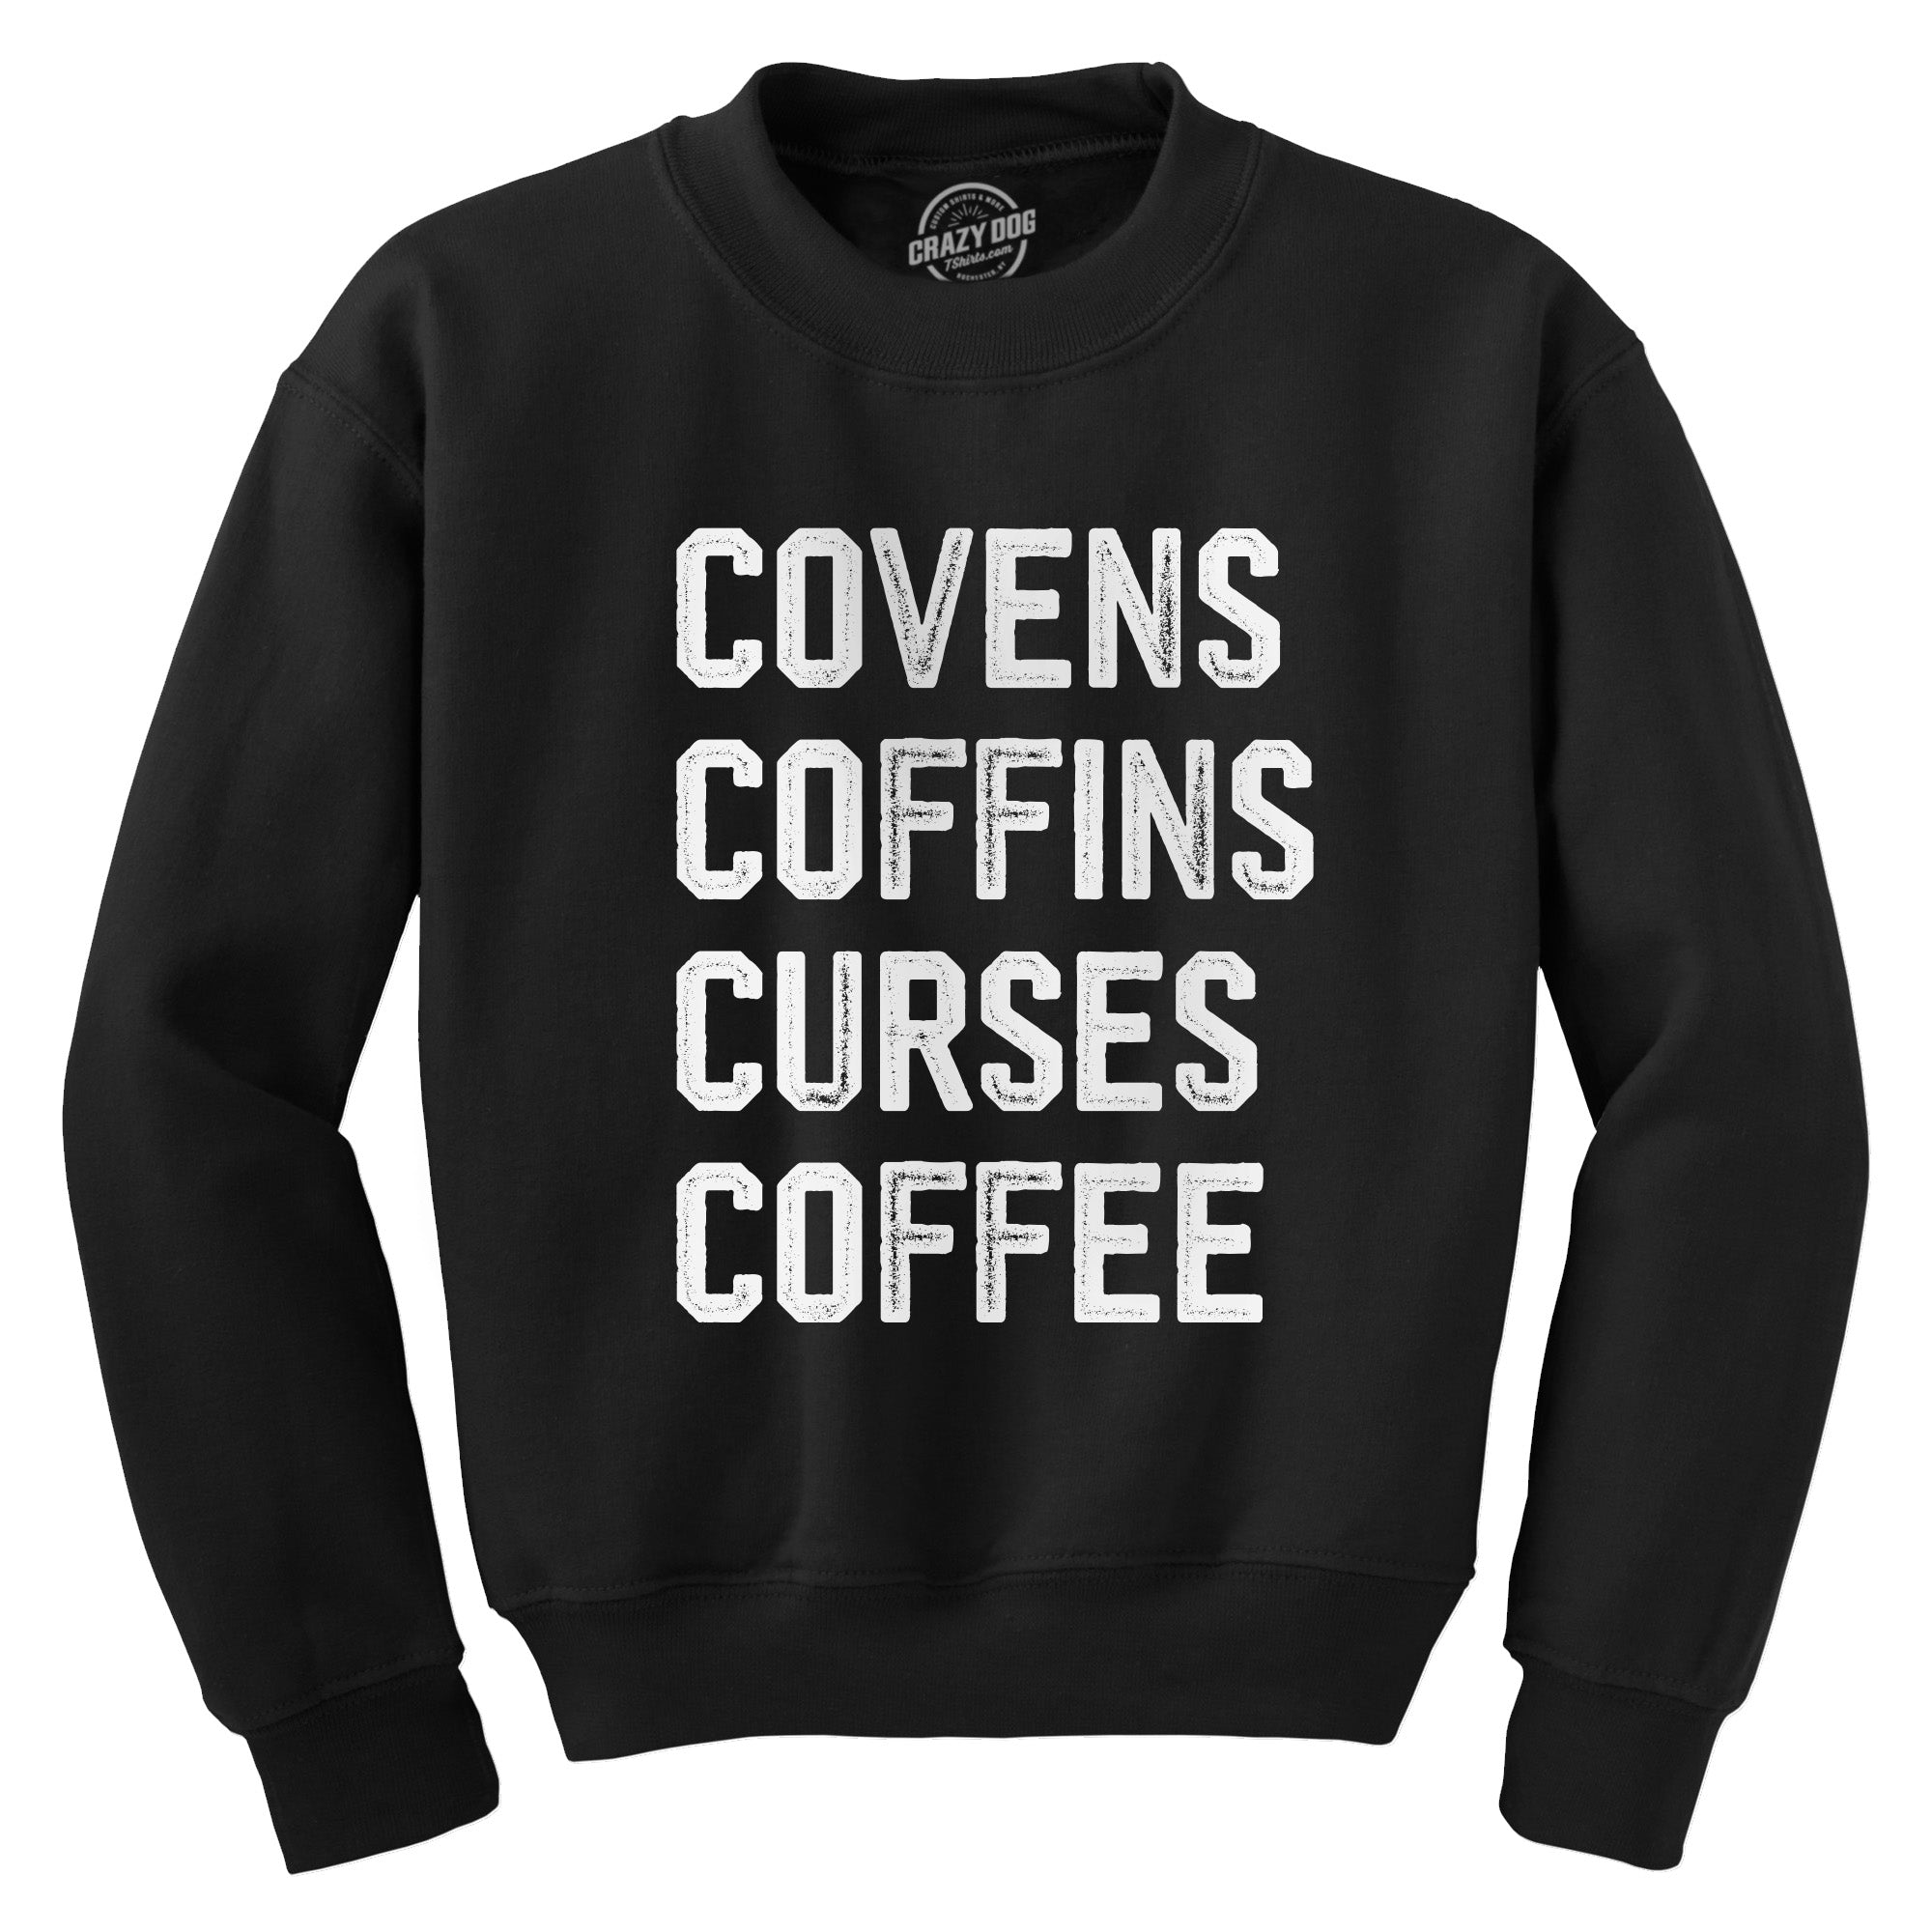 Funny Black - COVENS Covens Coffins Curses Coffee Sweatshirt Nerdy Halloween coffee Tee